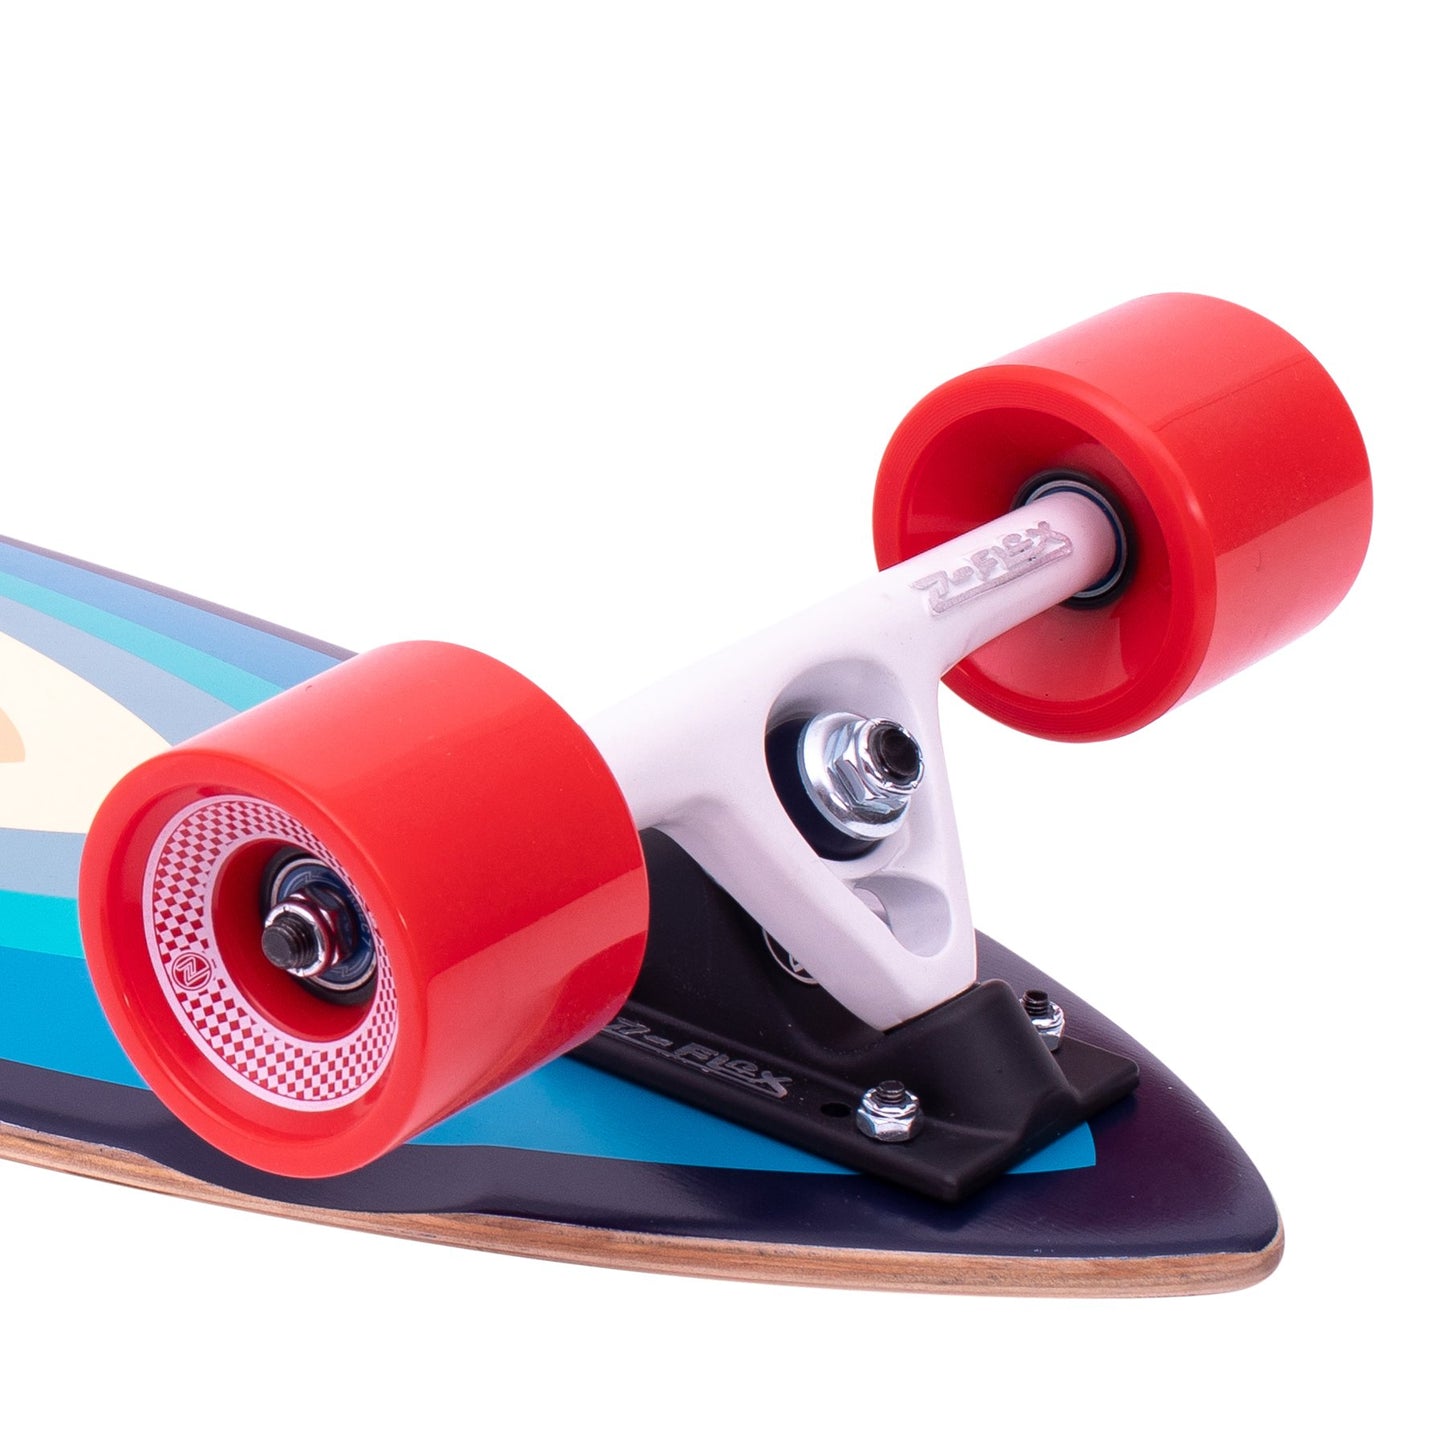 Z-FLEX スケートボード 38インチ Surf-a-gogoコンプリート ピンテール-Z-FLEX SKATEBOARDS JAPAN OFFICIAL【公式通販】